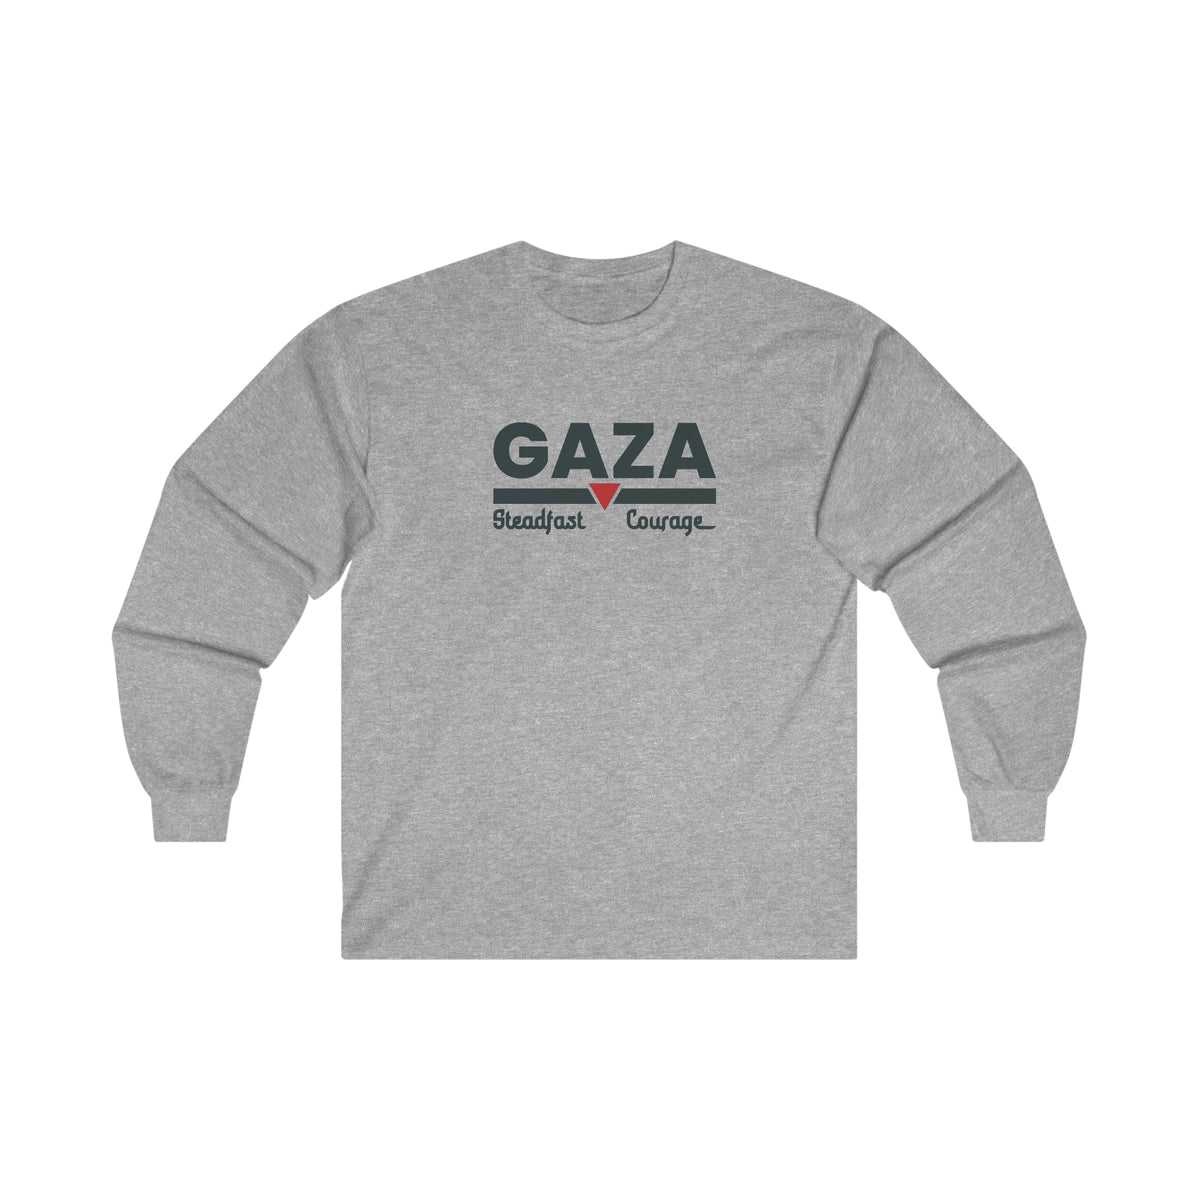 Gaza Courage LGY BK Long Sleeve Tee